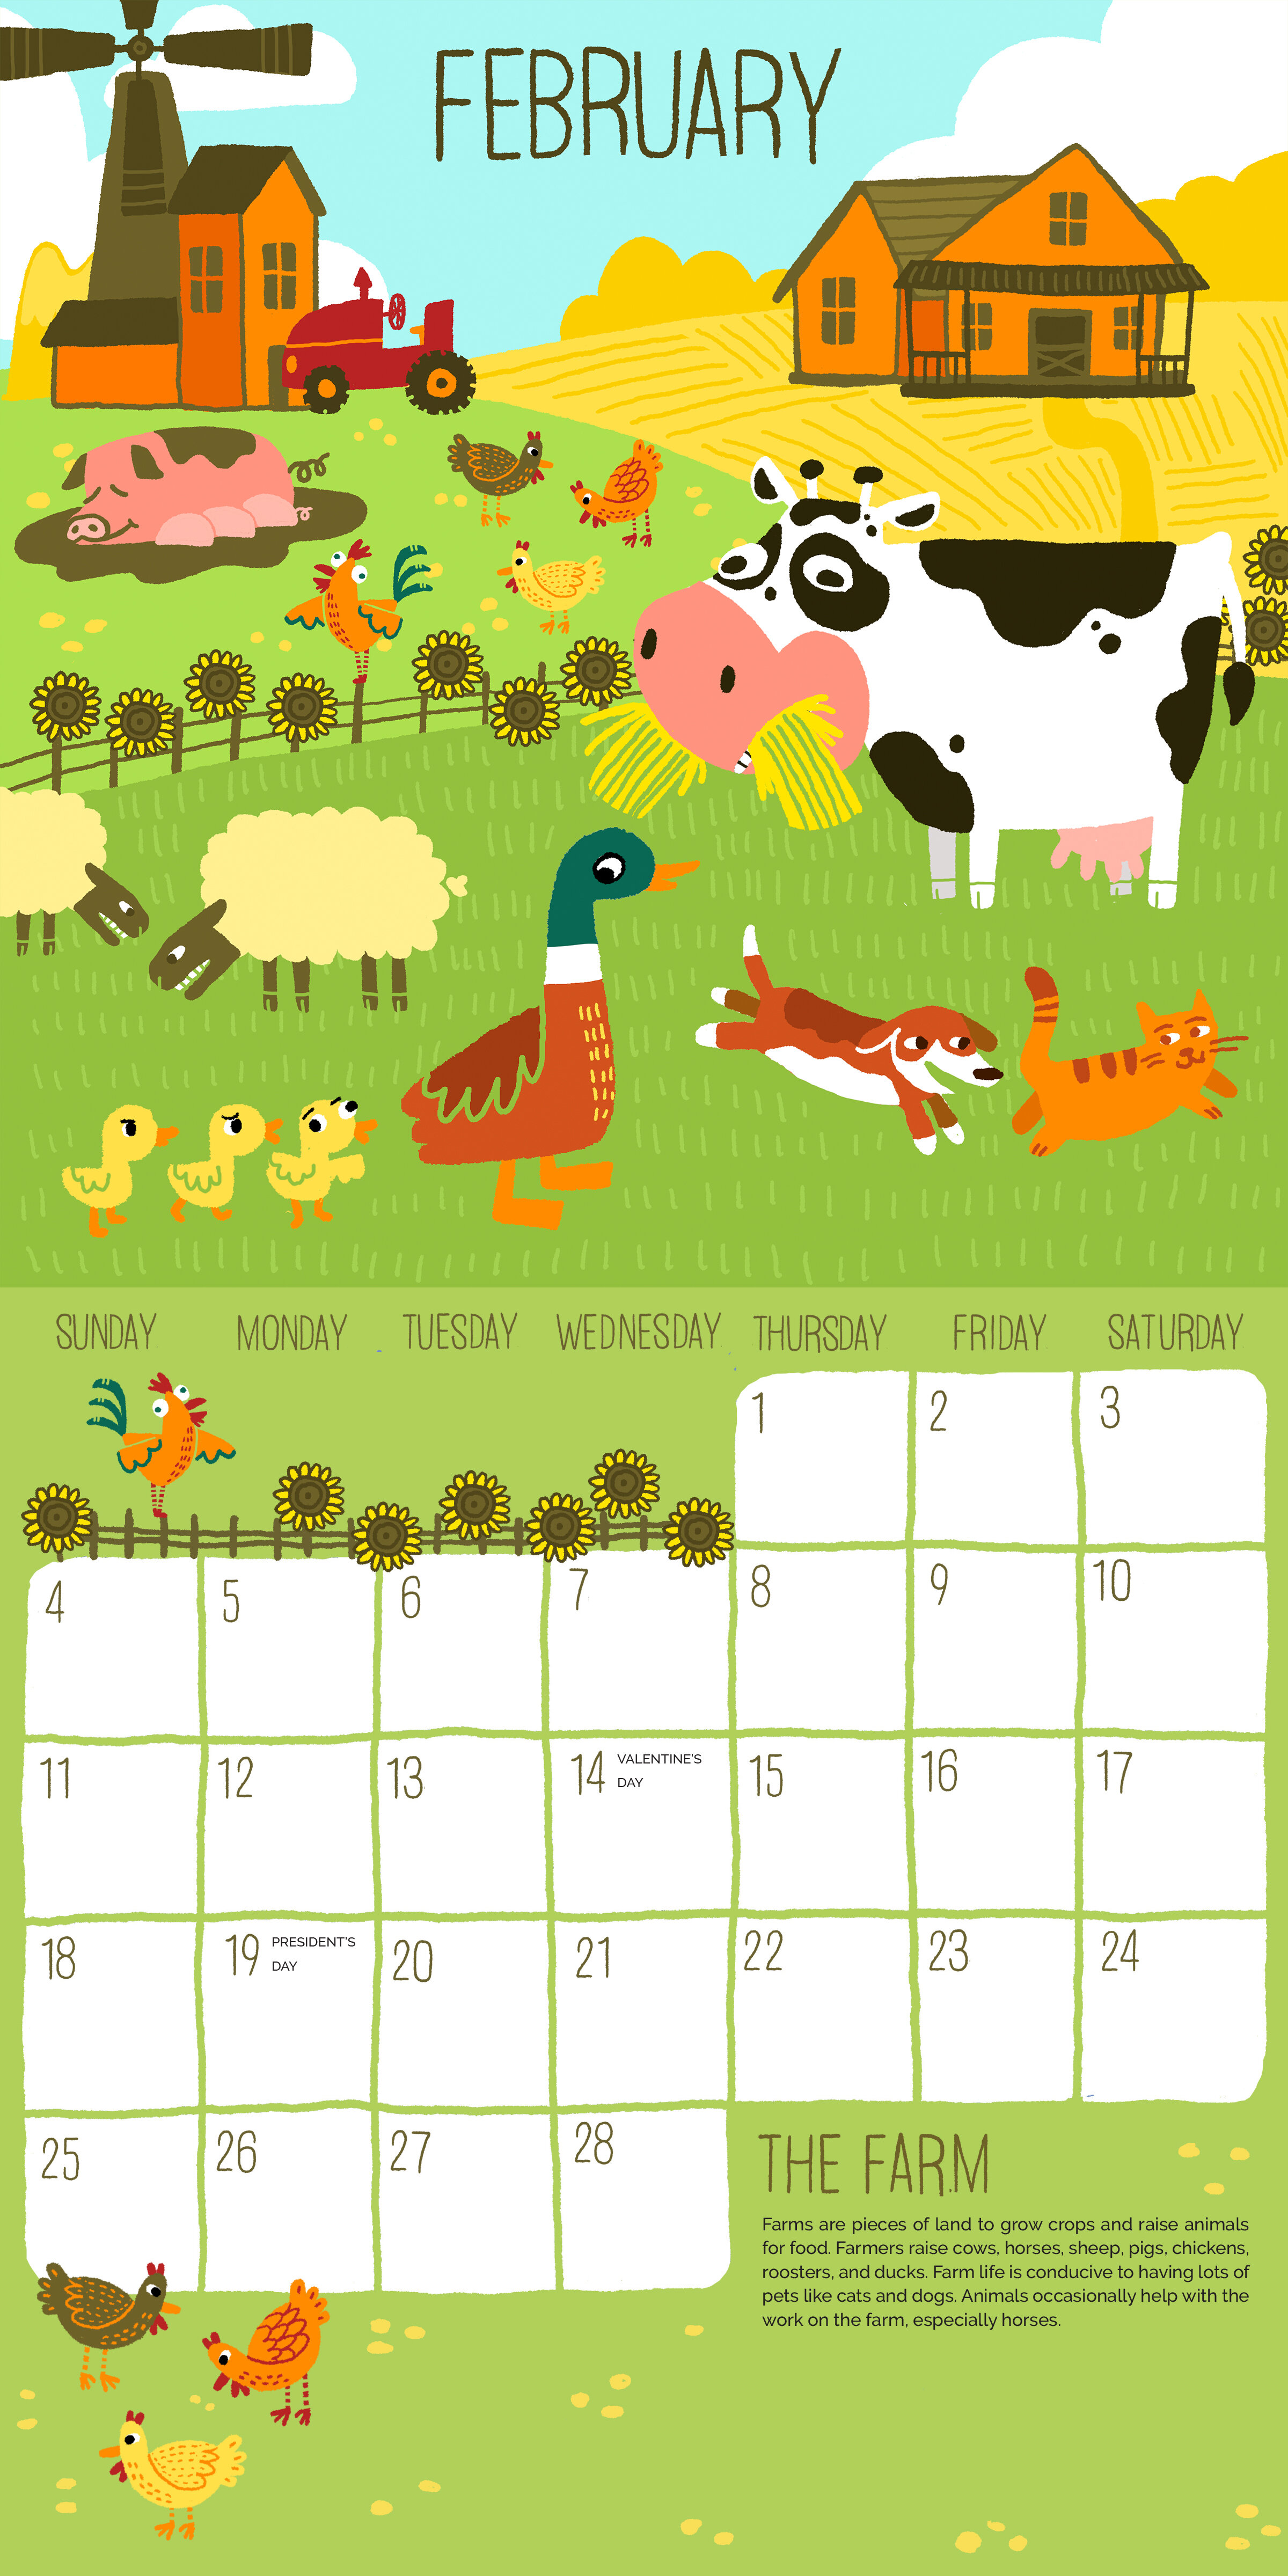 Call of the Wild Calendar: February (Farm)